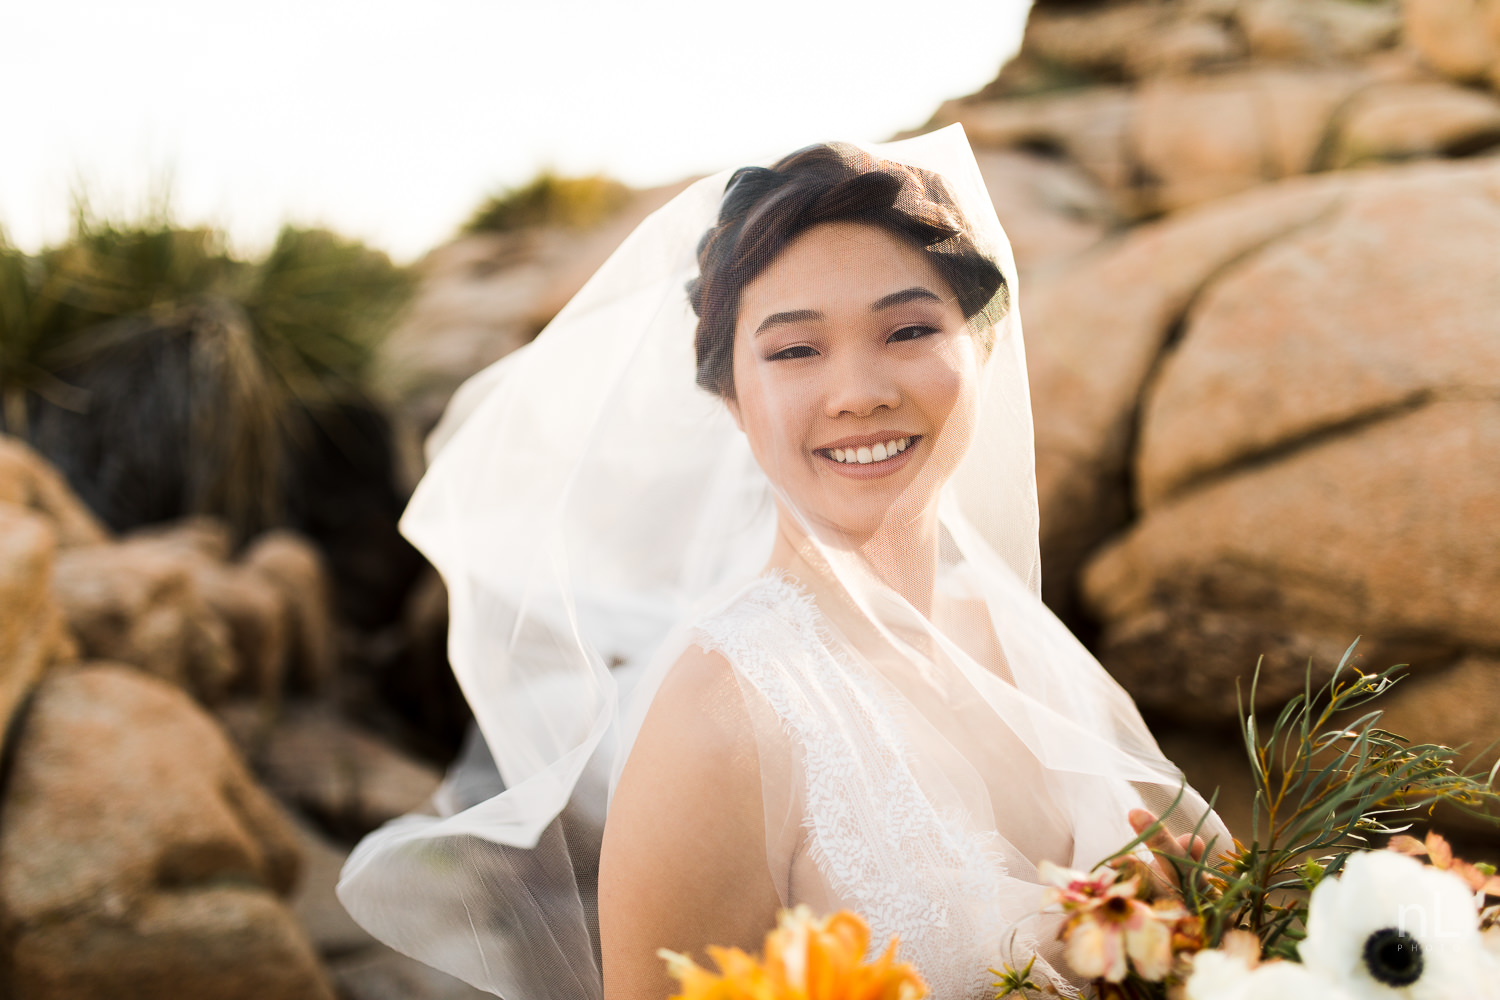 joshua-tree-engagement-wedding-elopement-photography-stylized-photoshoot-bridal-portrait-with-veil-floral-bouquet